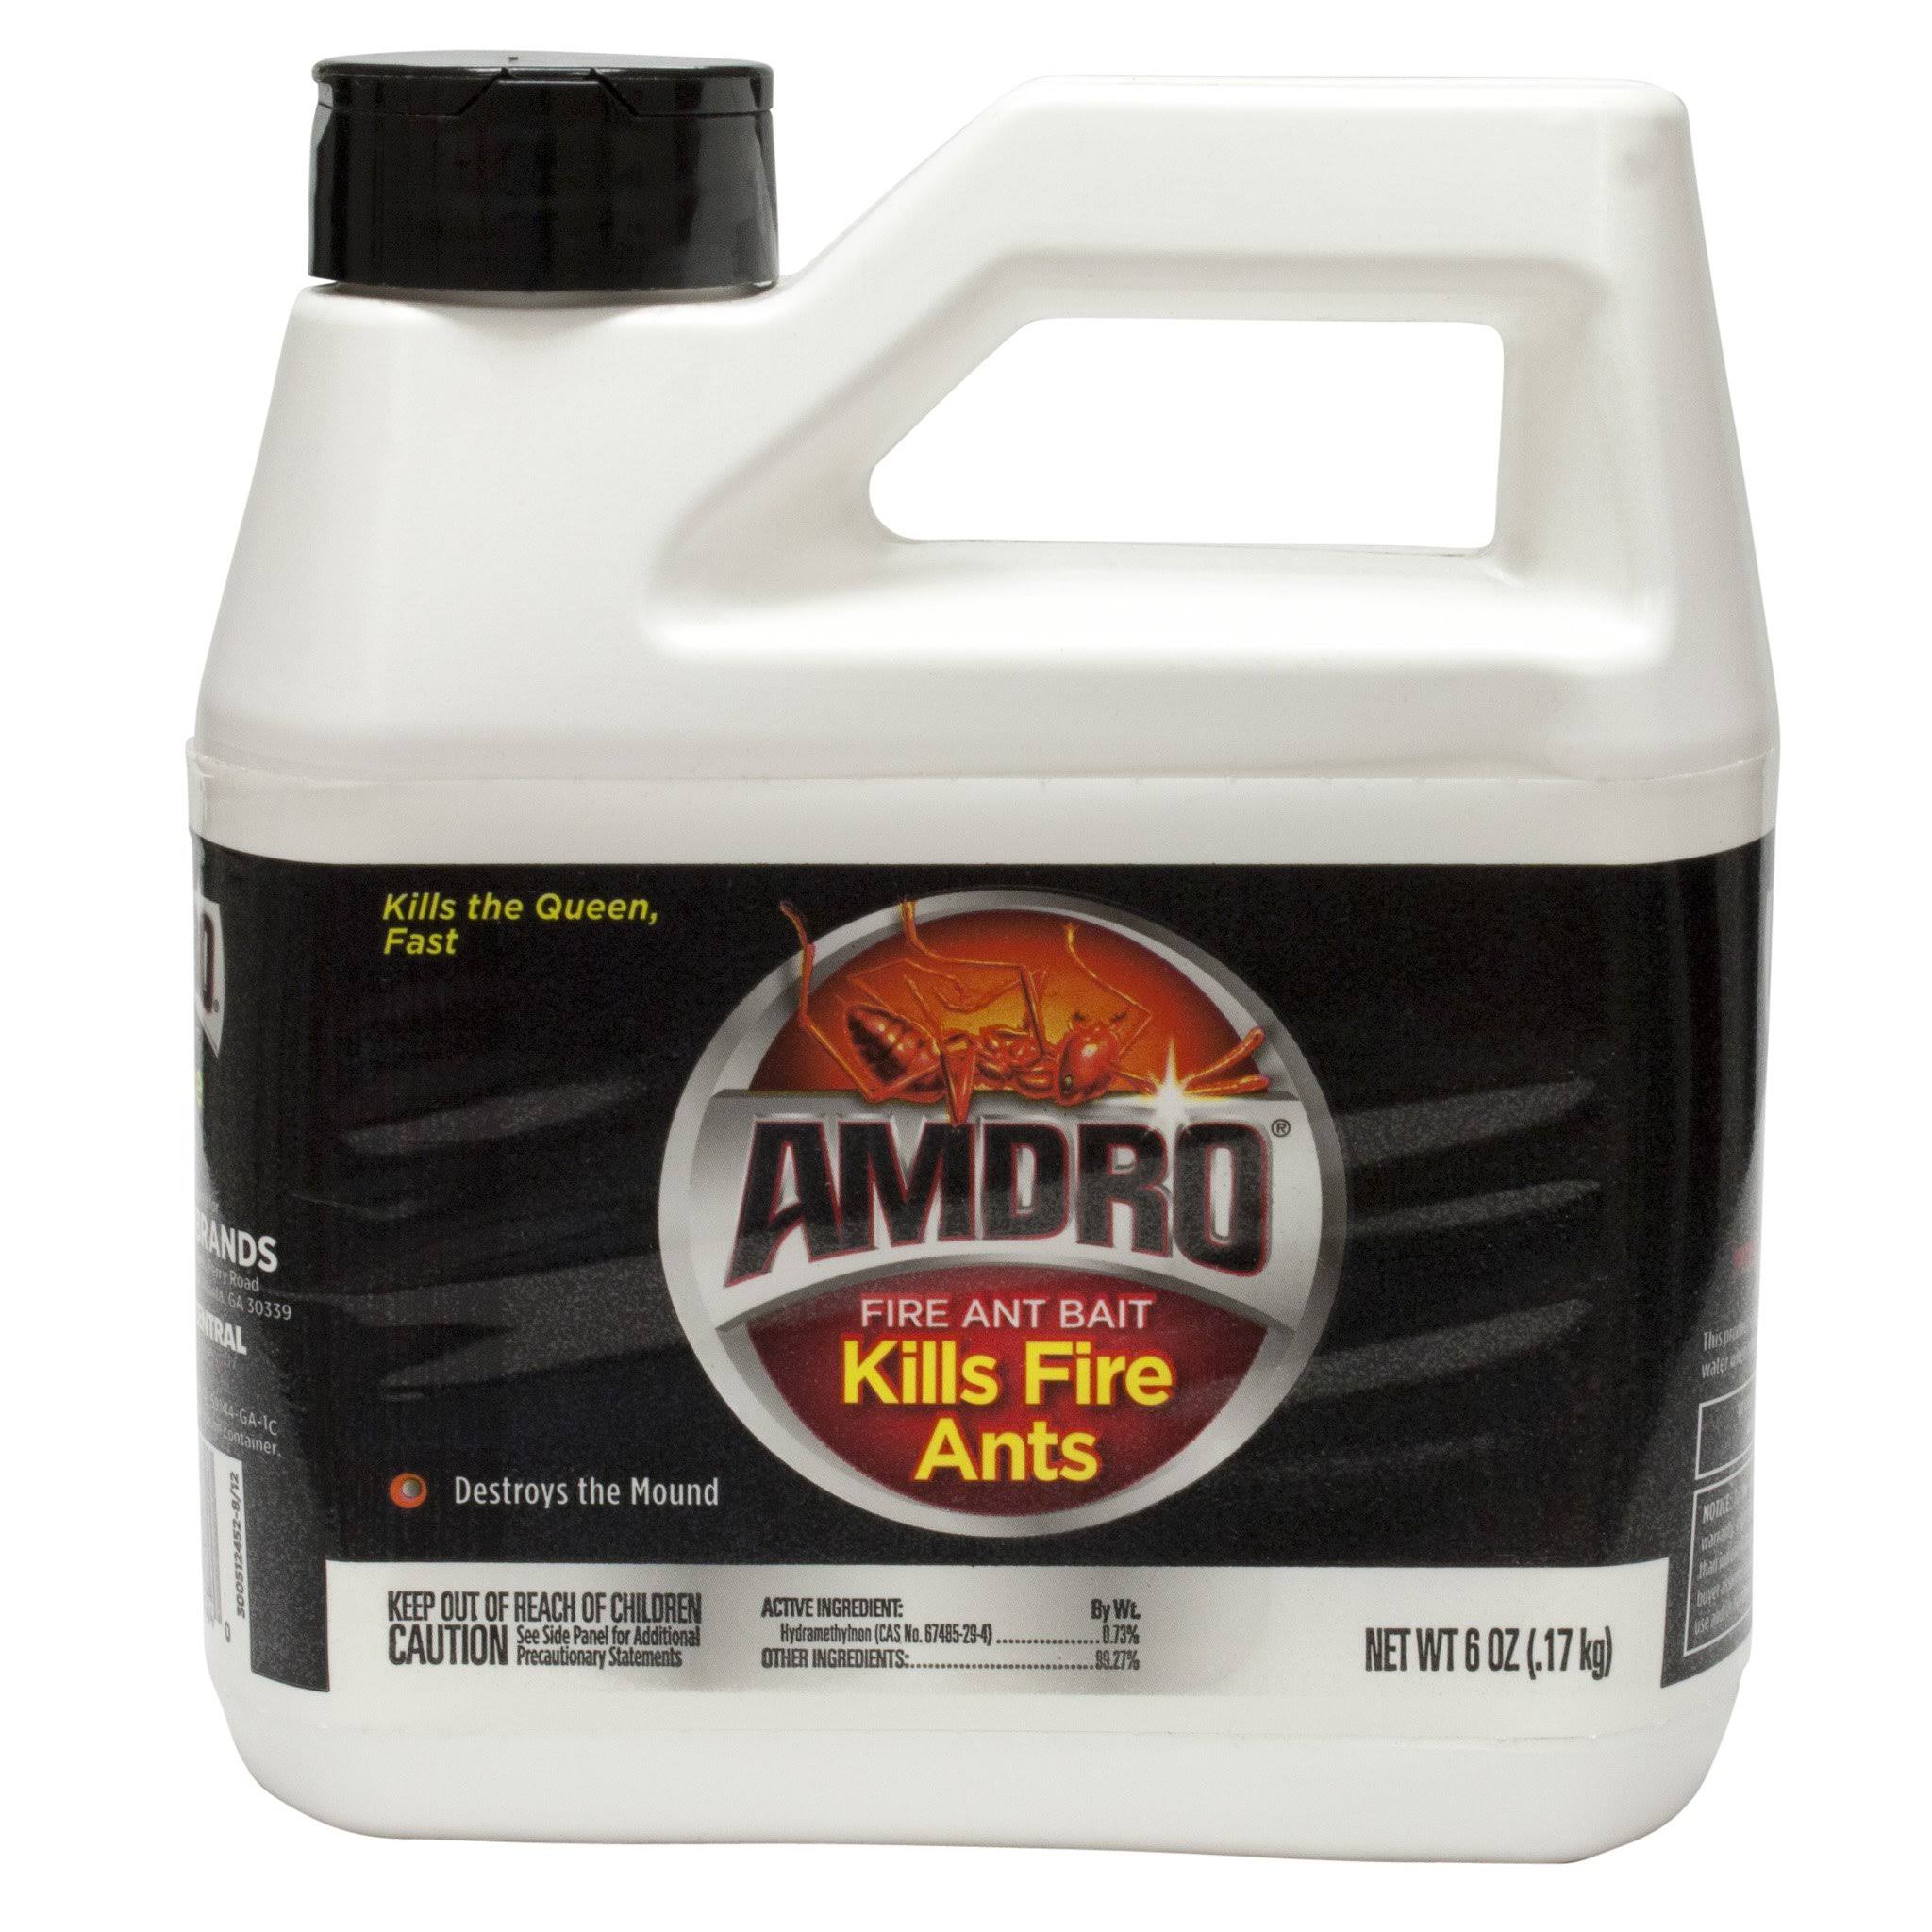 Ambrands Fire Ant Killer Granular Insecticide - 6oz